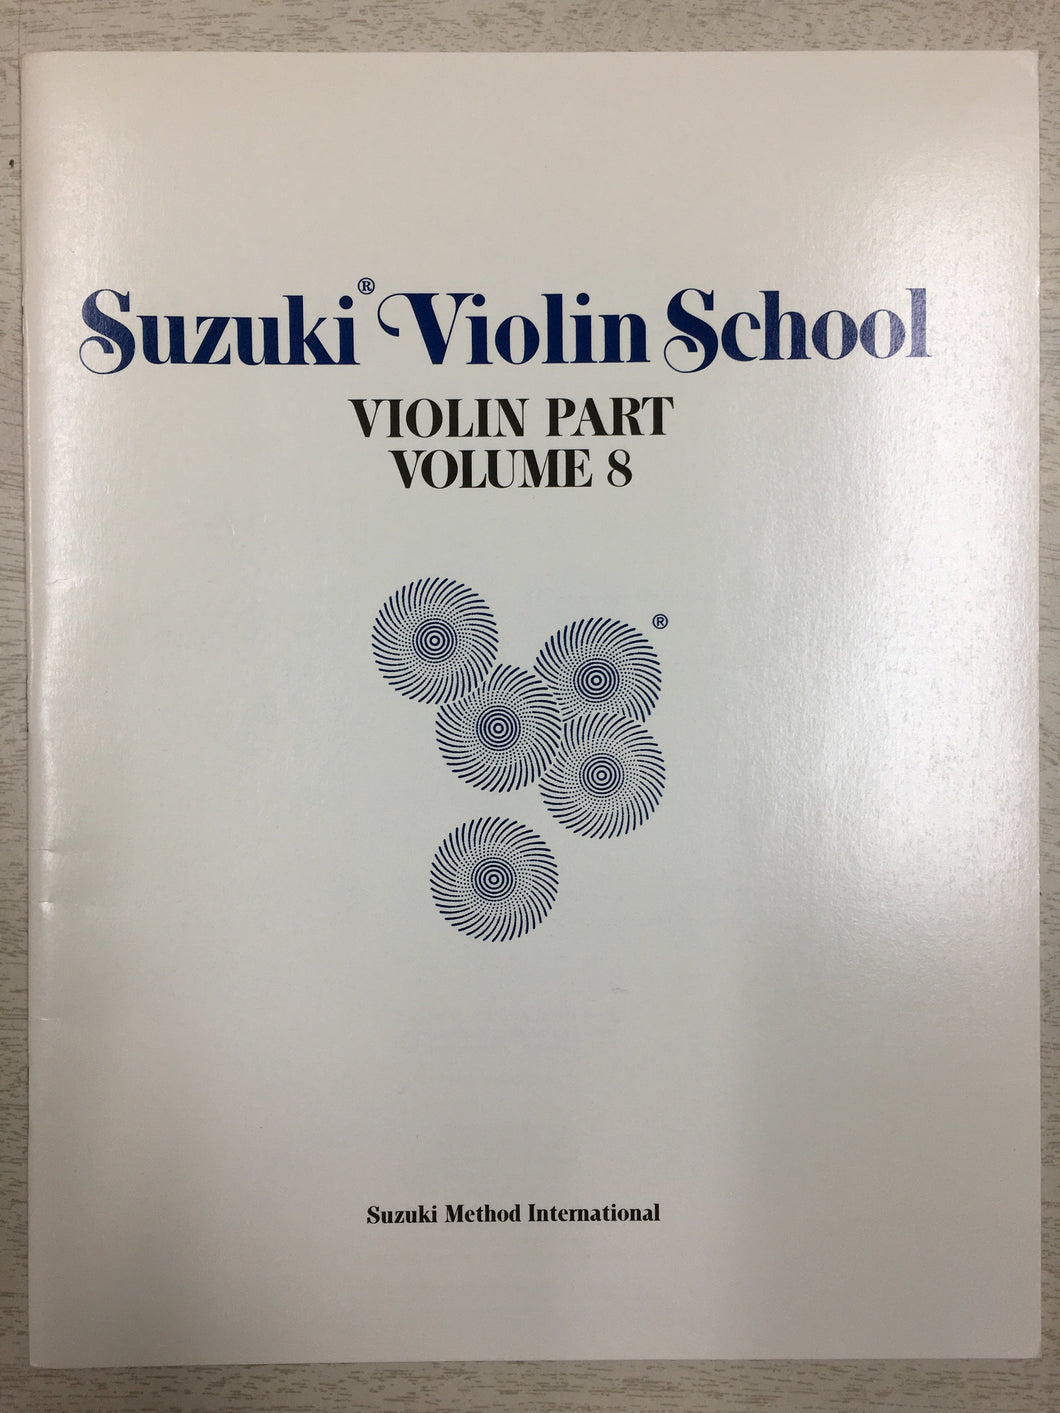 Suzuki Violin School, Volume 8: Violin Part